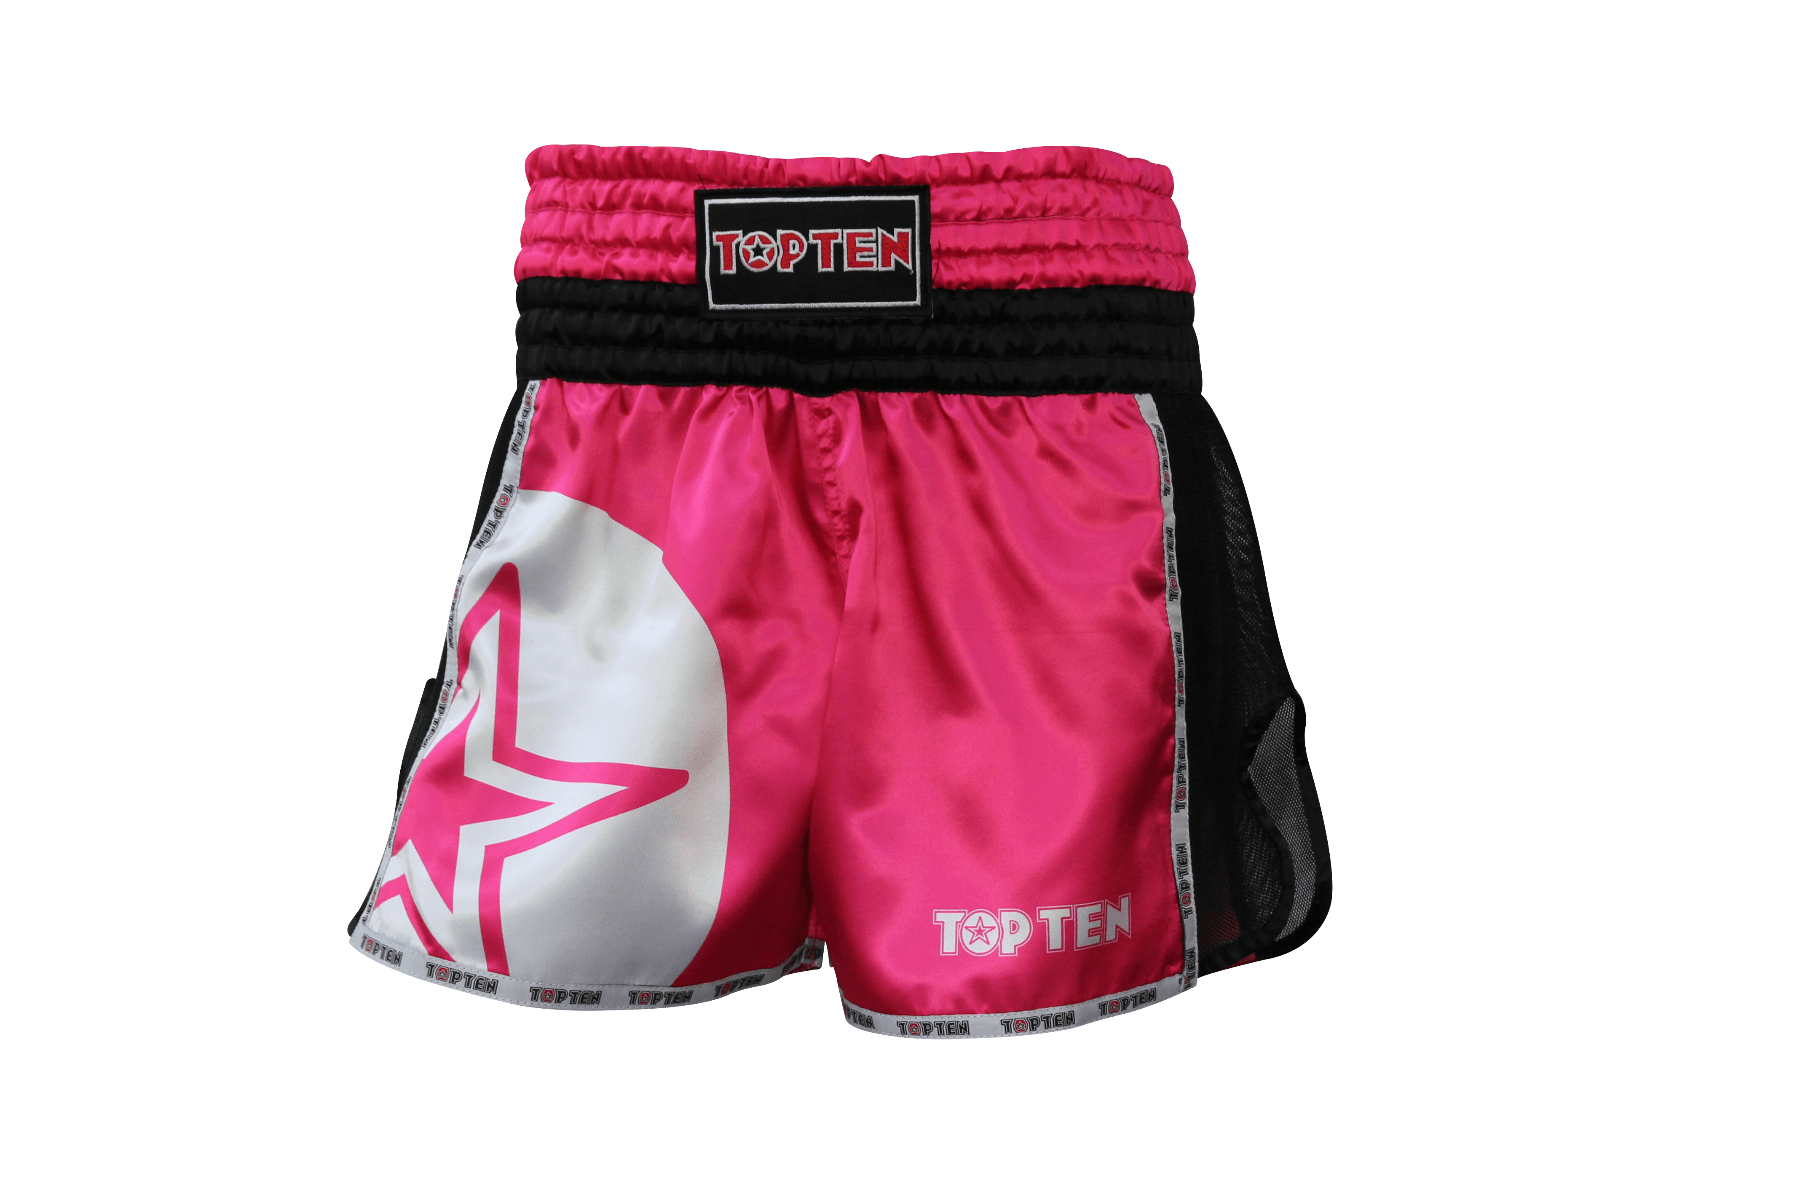 thai-kickboxing-shorts-topten-star-pink-front